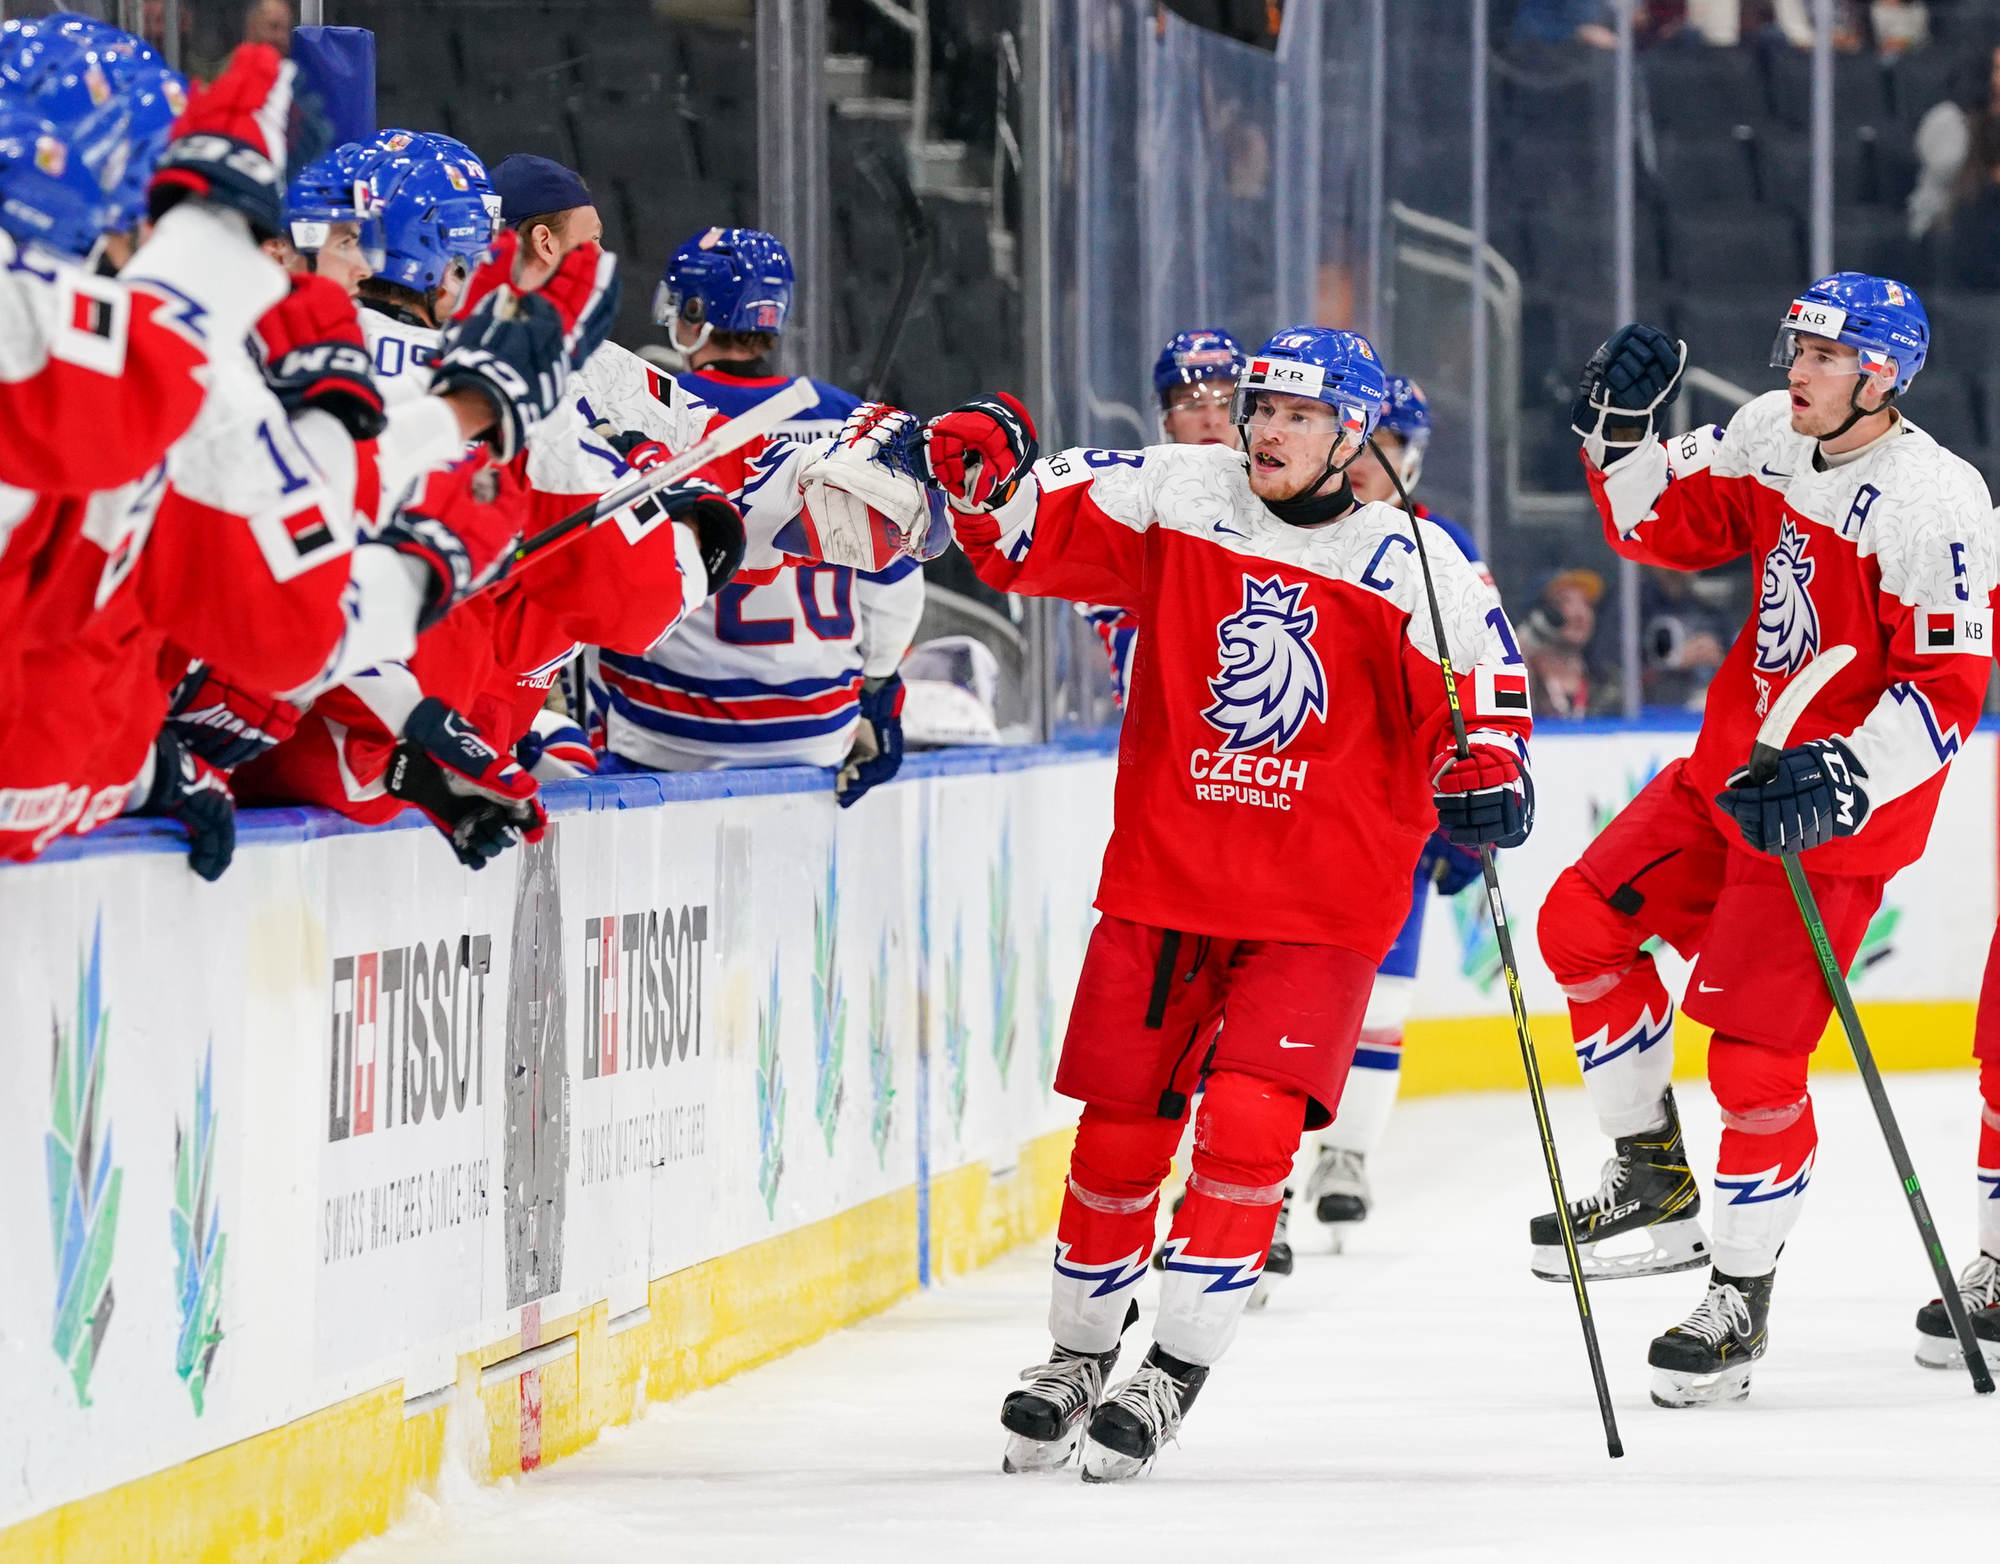 IIHF - Czechs stun U.S., go to semis